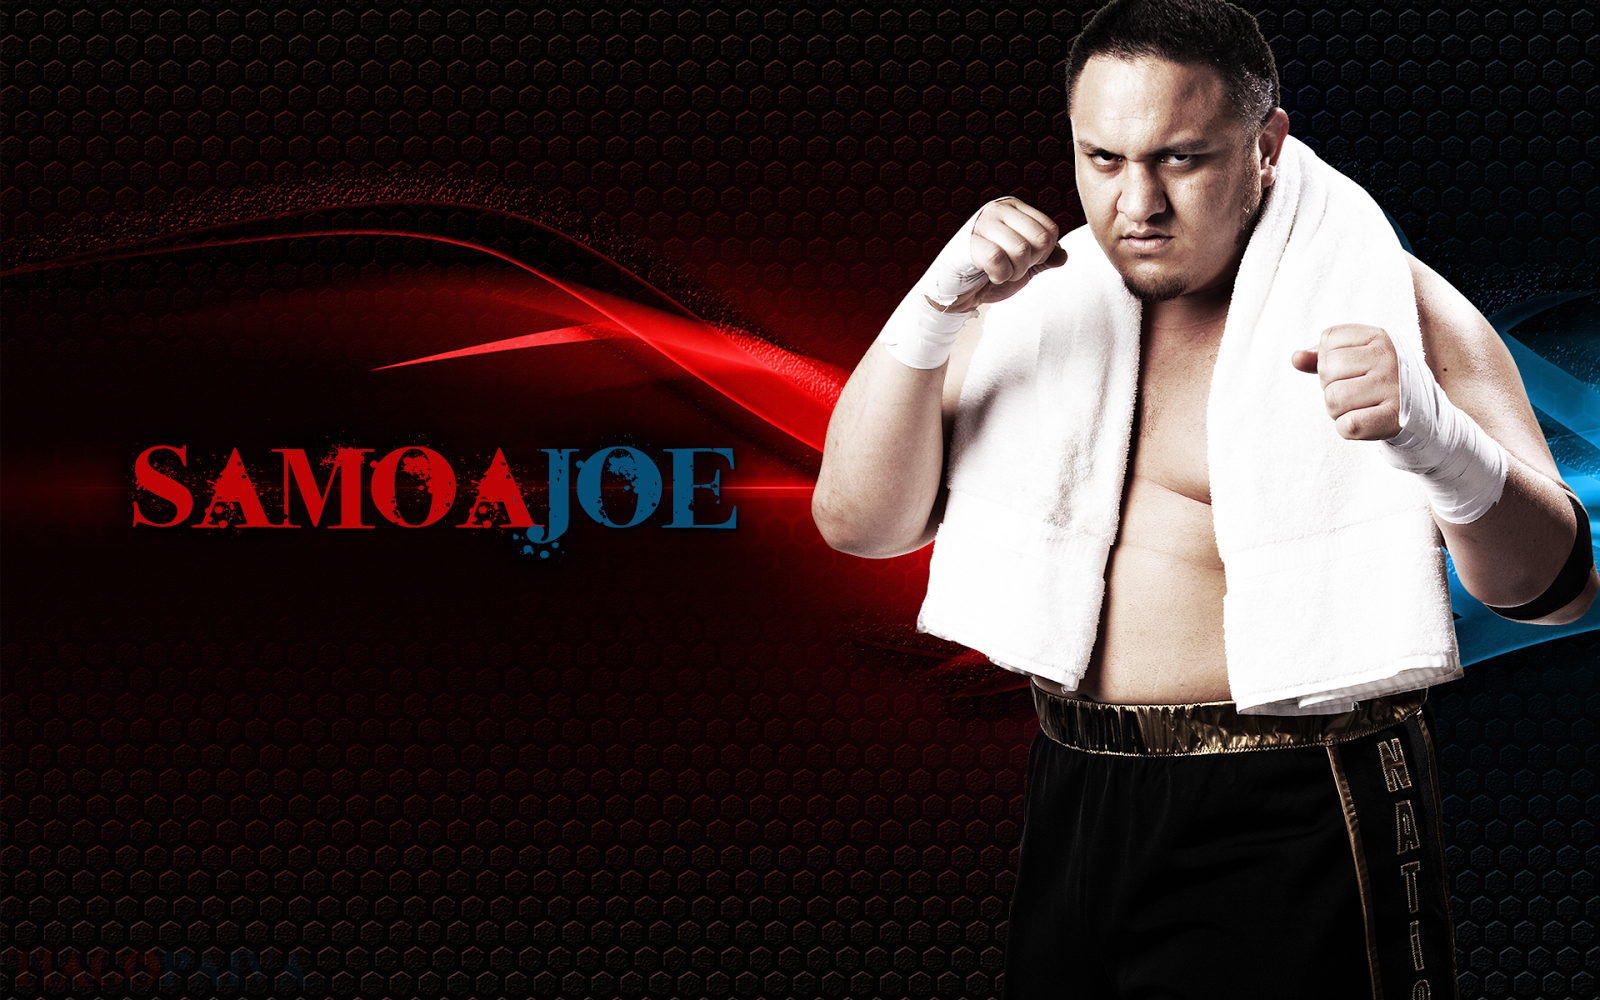 Samoa Joe Hd Wallpapers Free Download | WWE HD WALLPAPER FREE DOWNLOAD